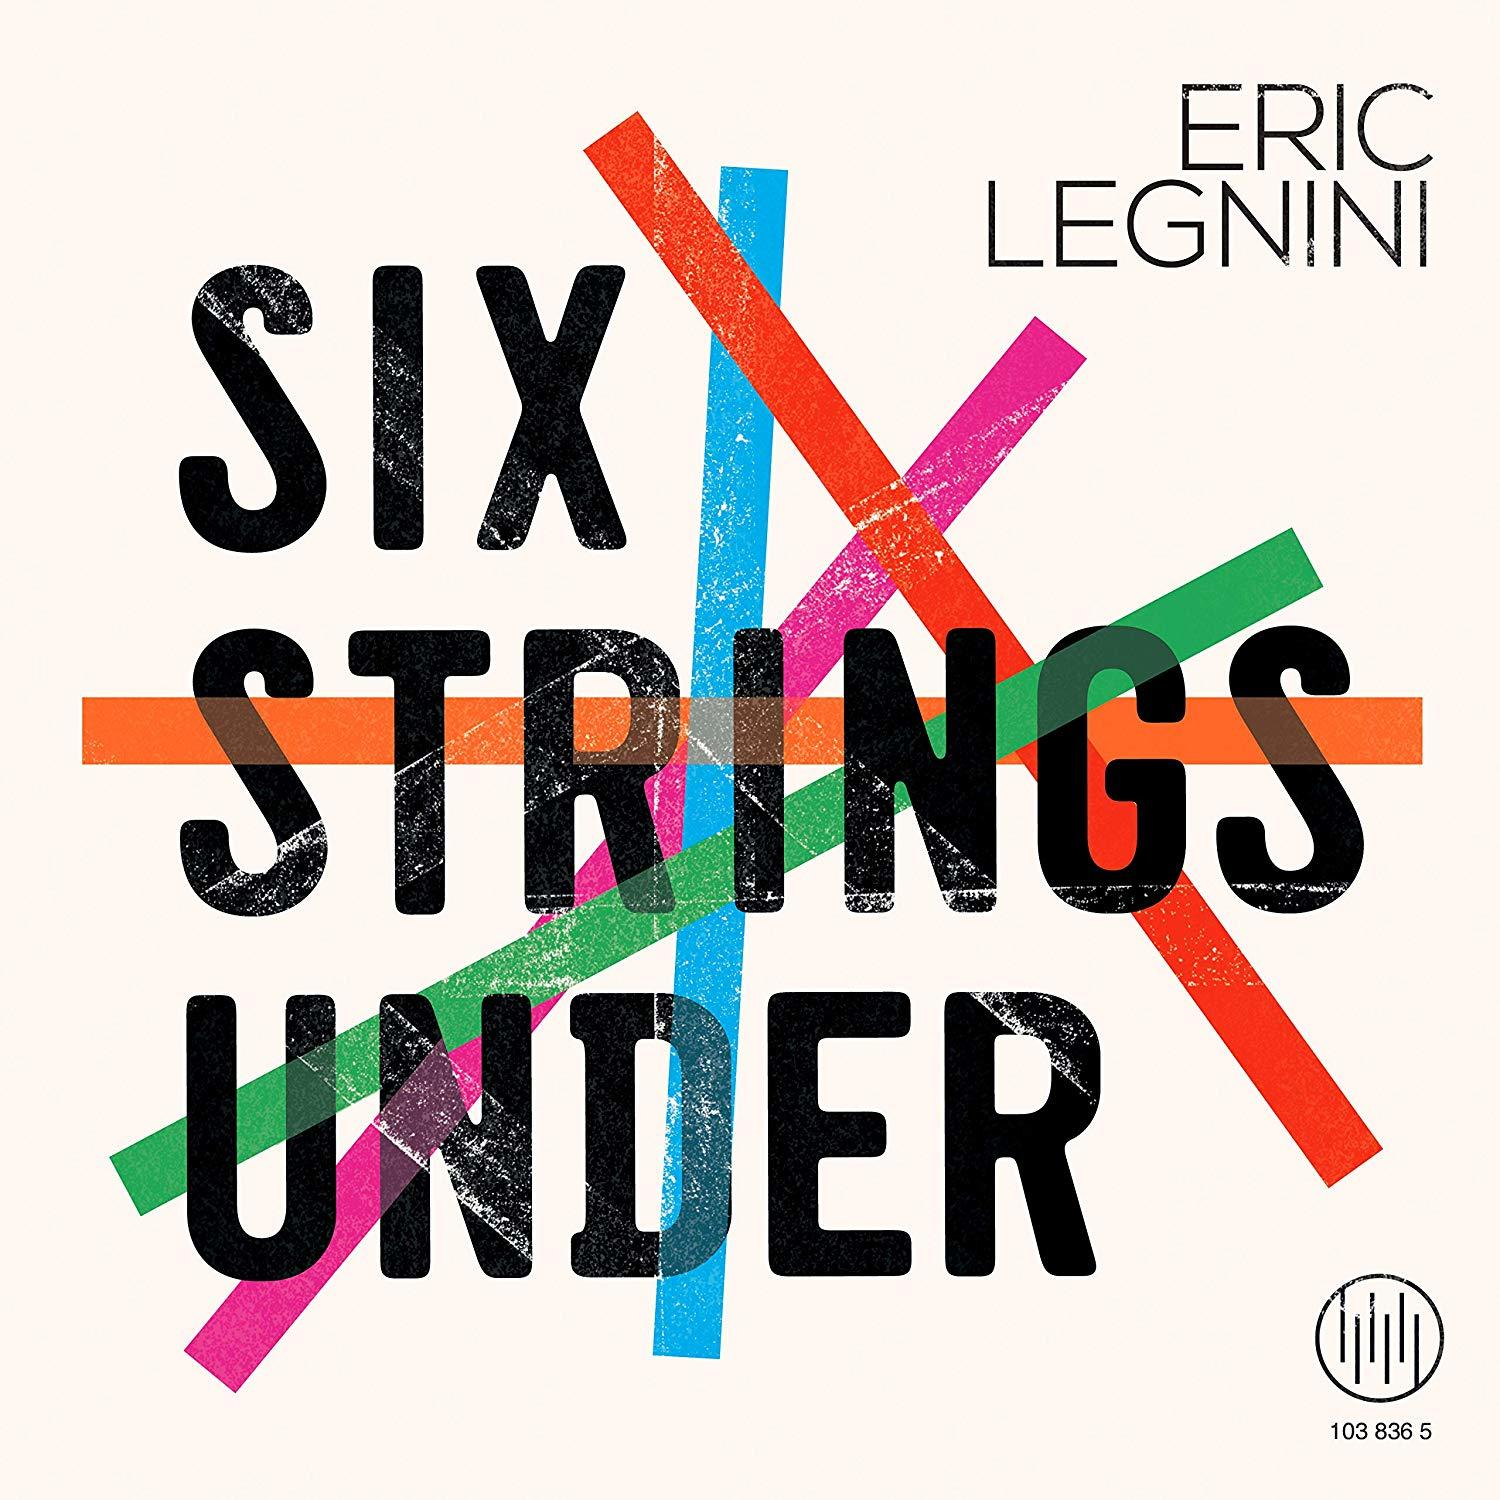 Eric Legnini under - six (Vinyl) - strings